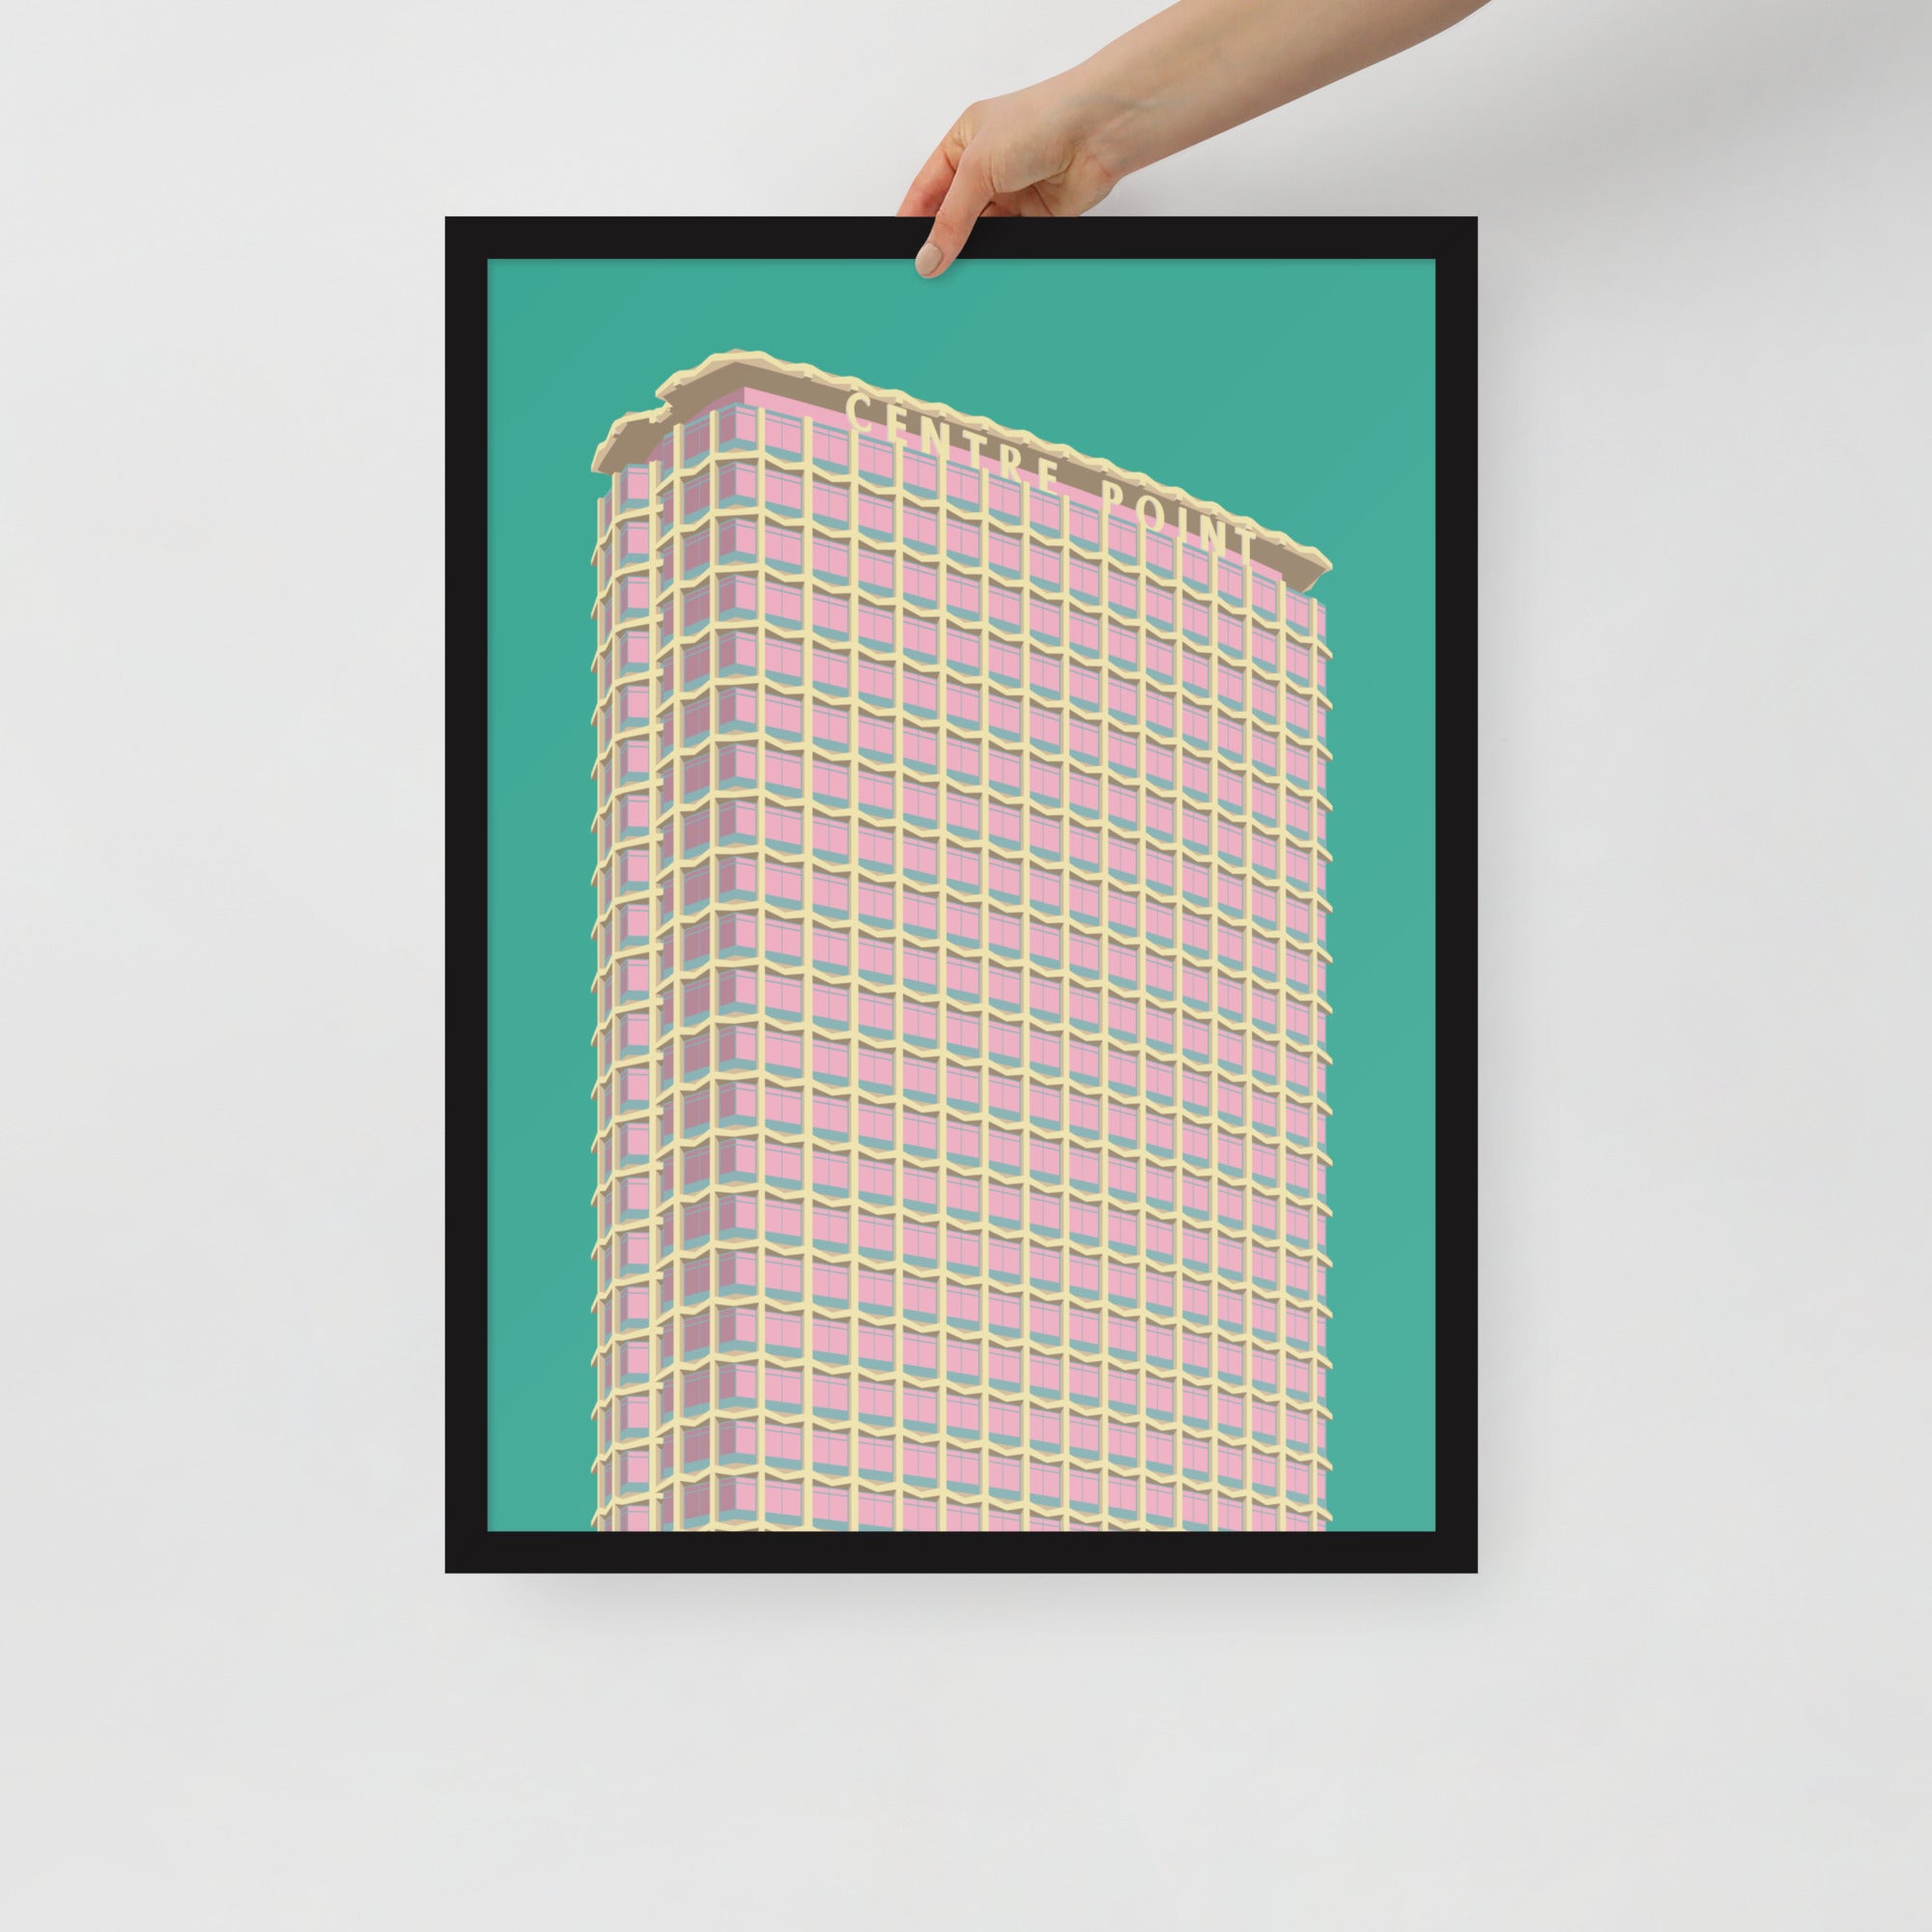 Centre Point Pastel Framed Prints